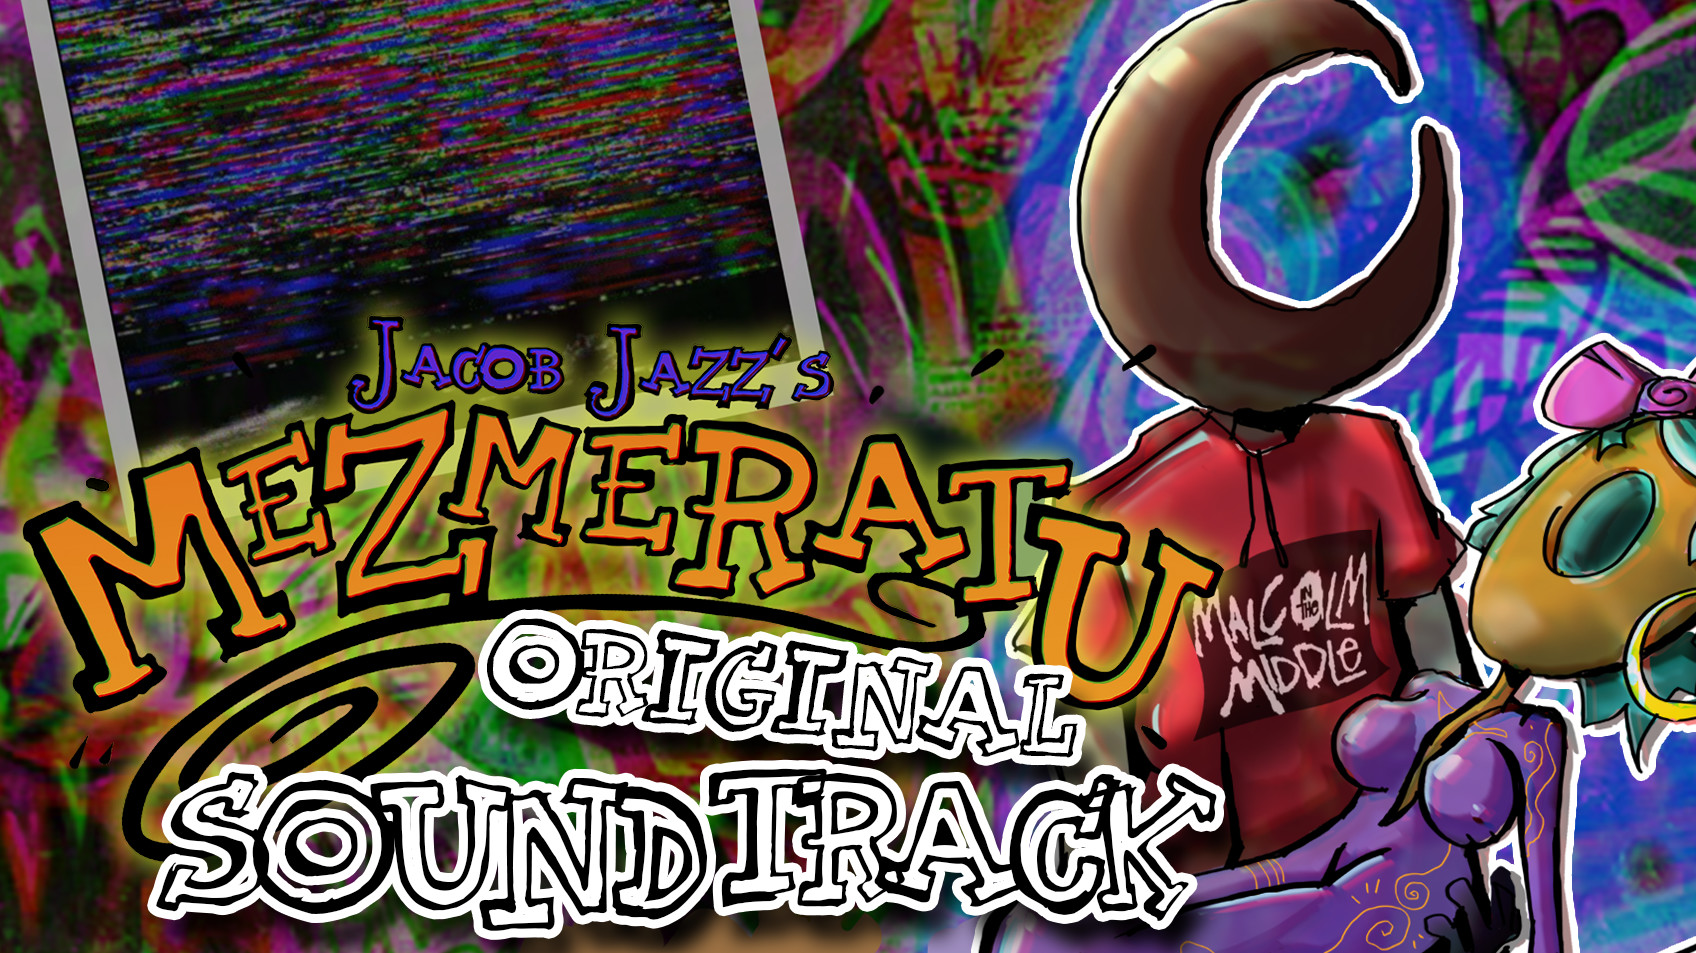 Mezmeratu Soundtrack Featured Screenshot #1